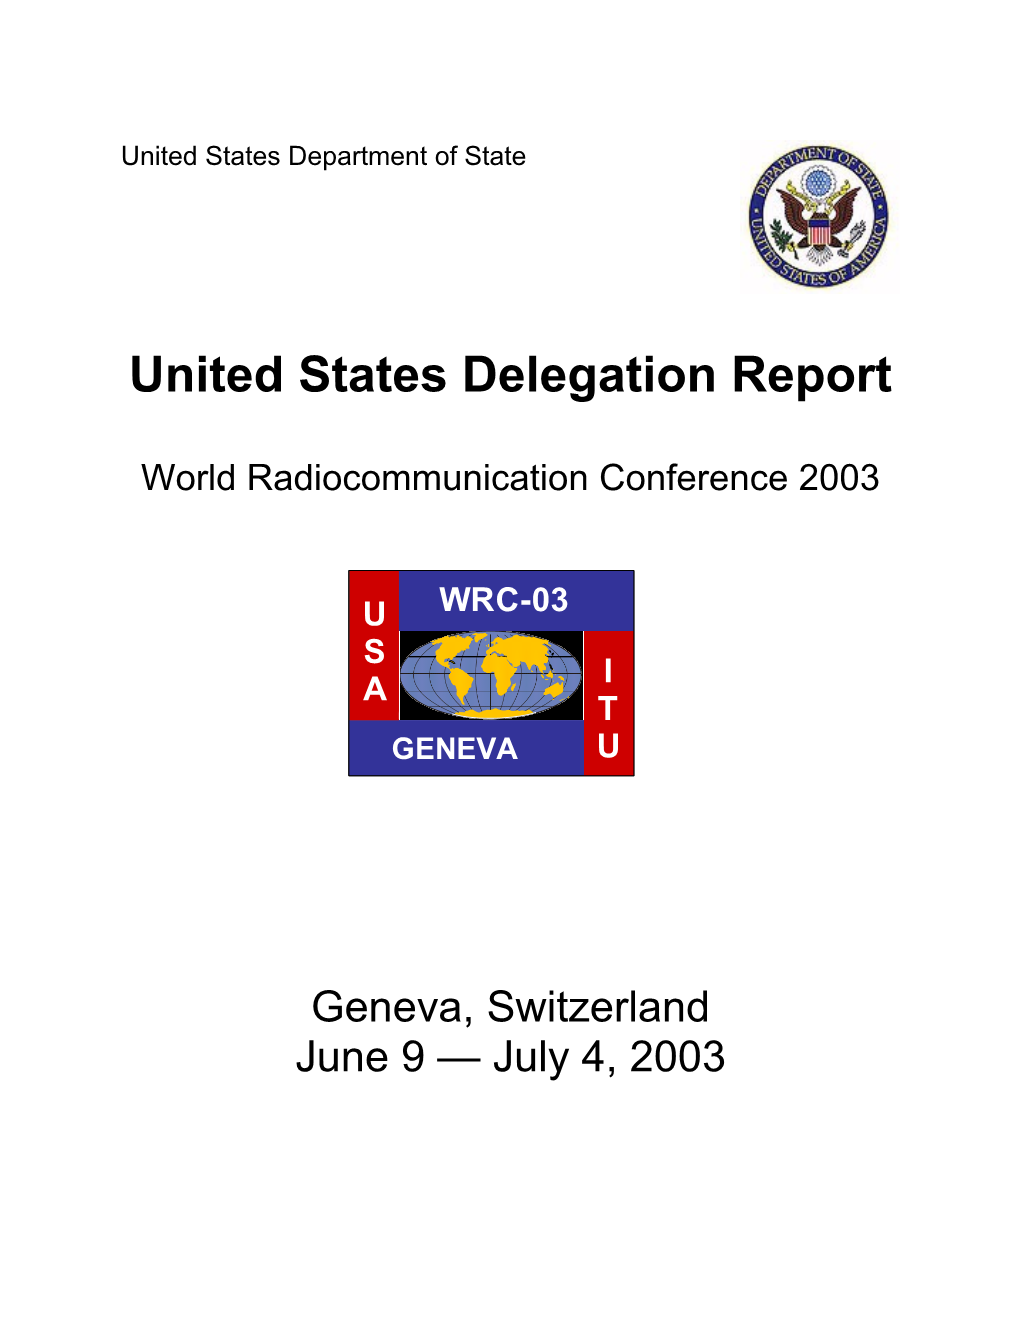 U.S. Delegation Report to Wrc-97